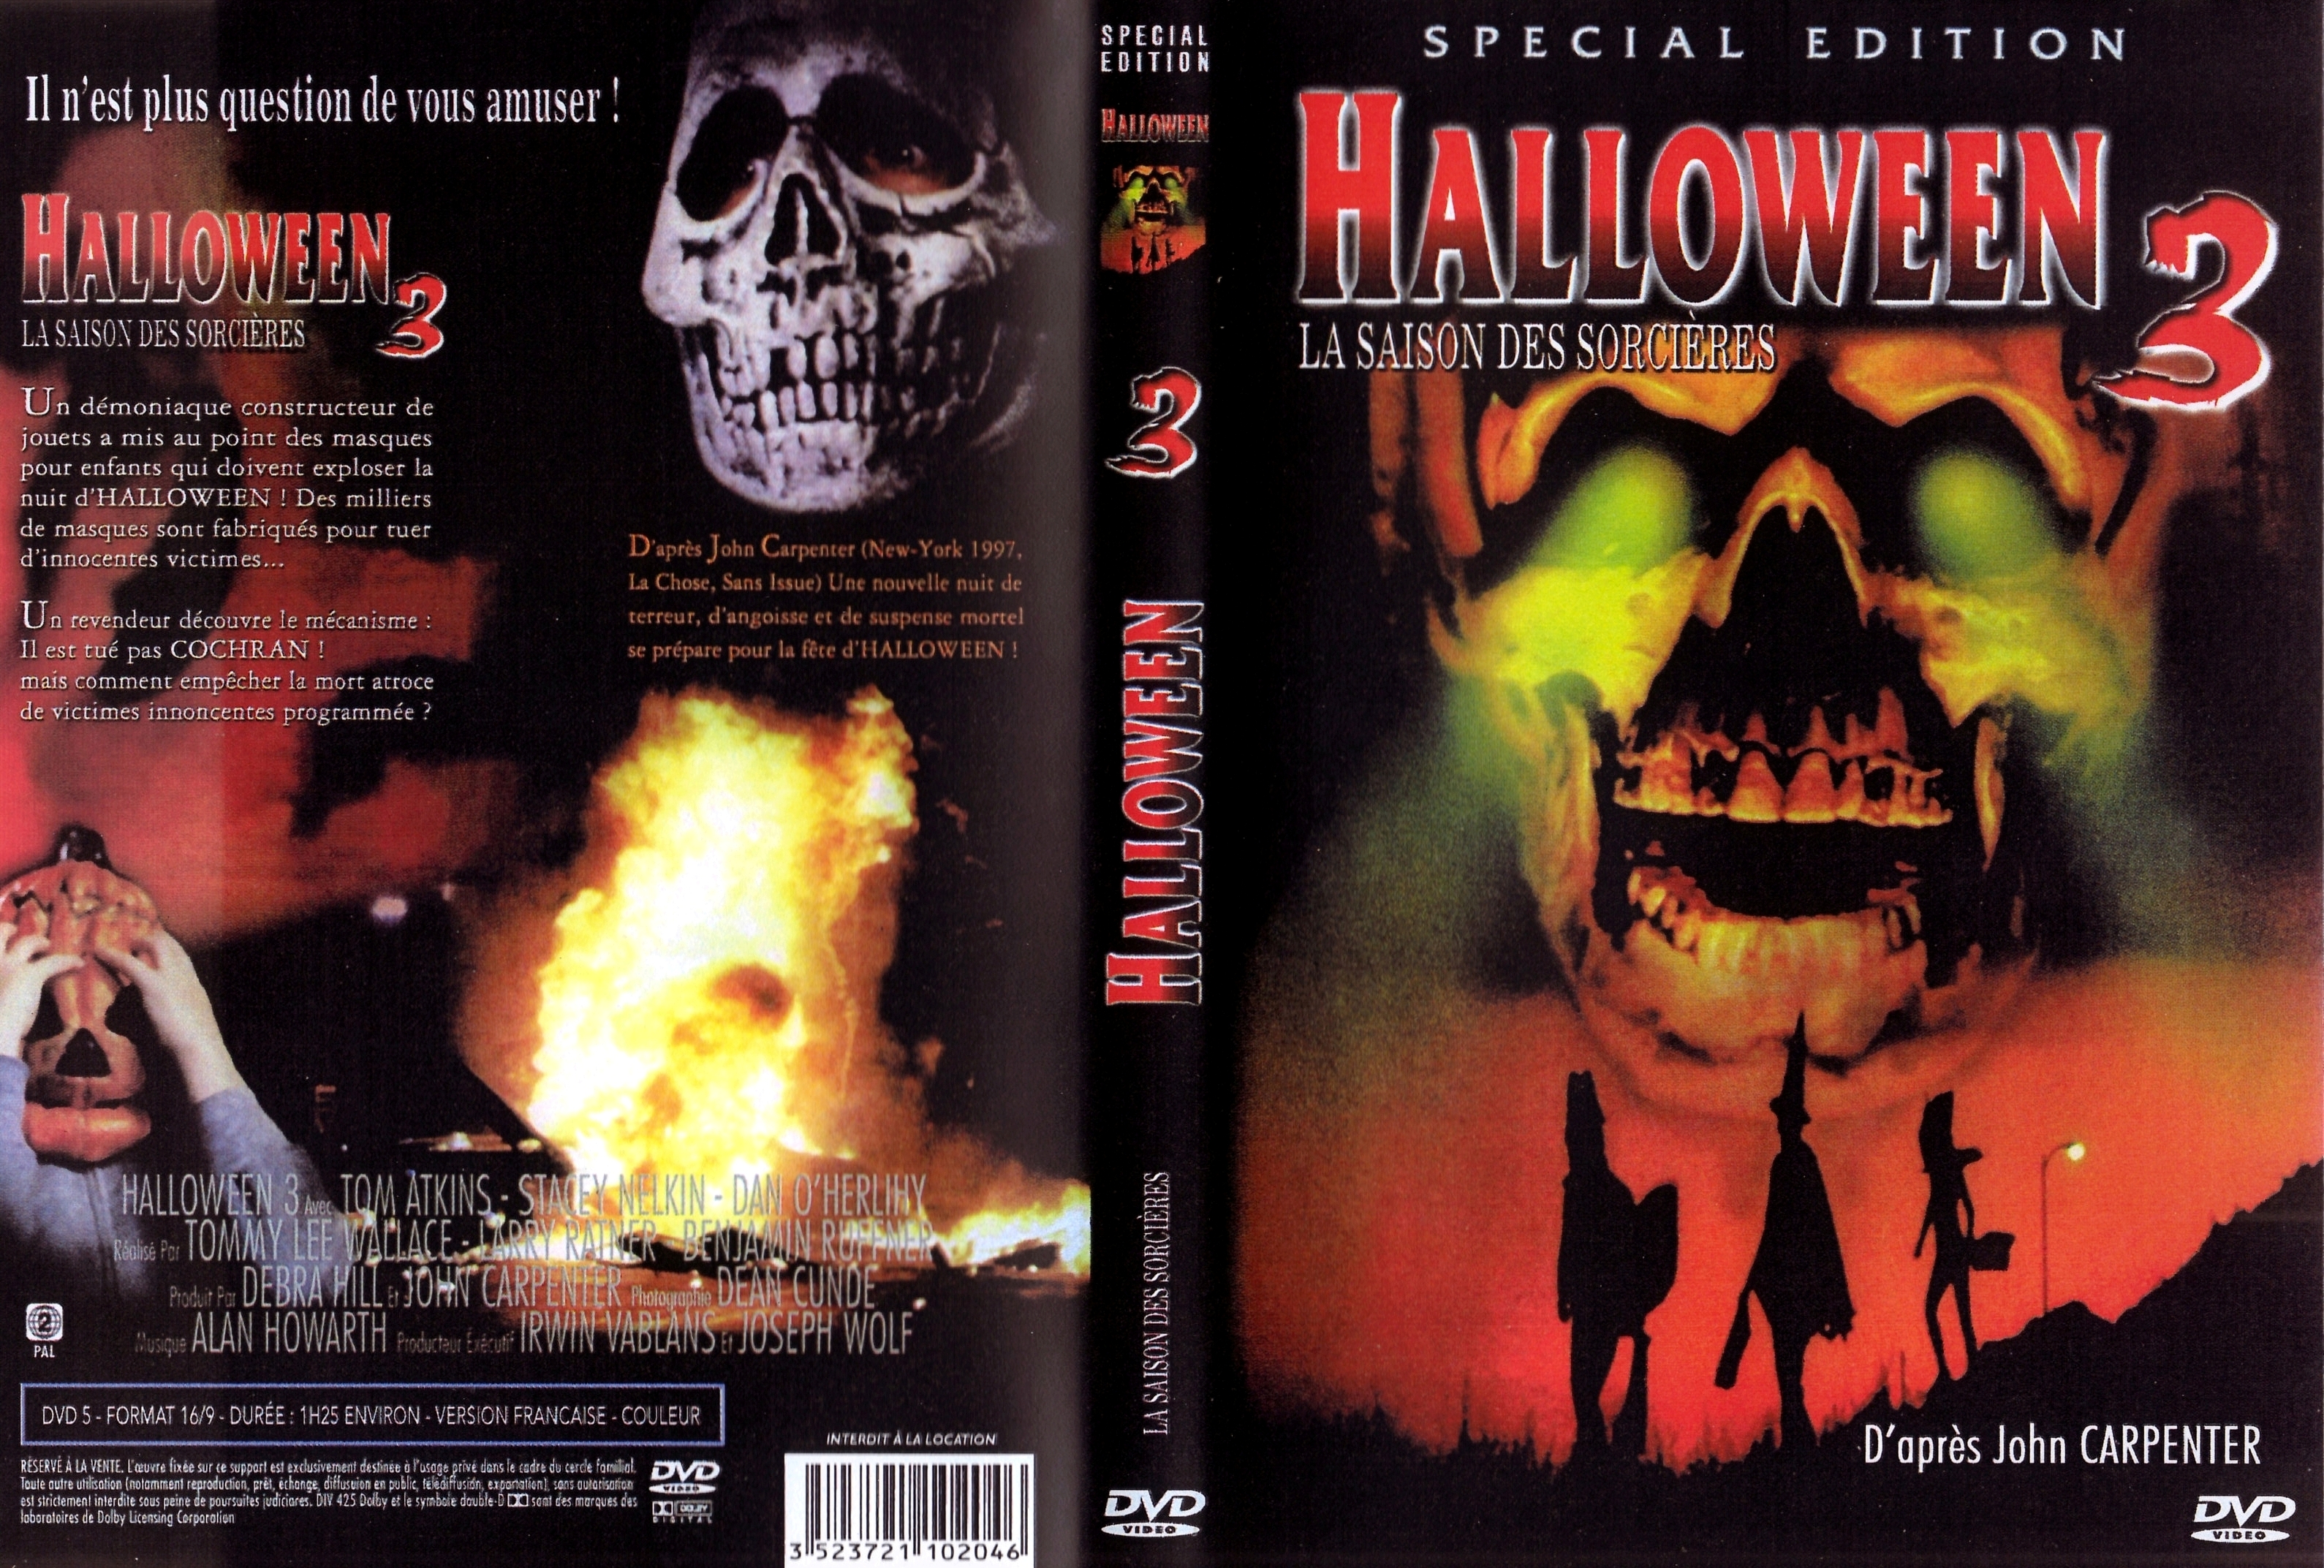 Jaquette DVD Halloween 3 v3